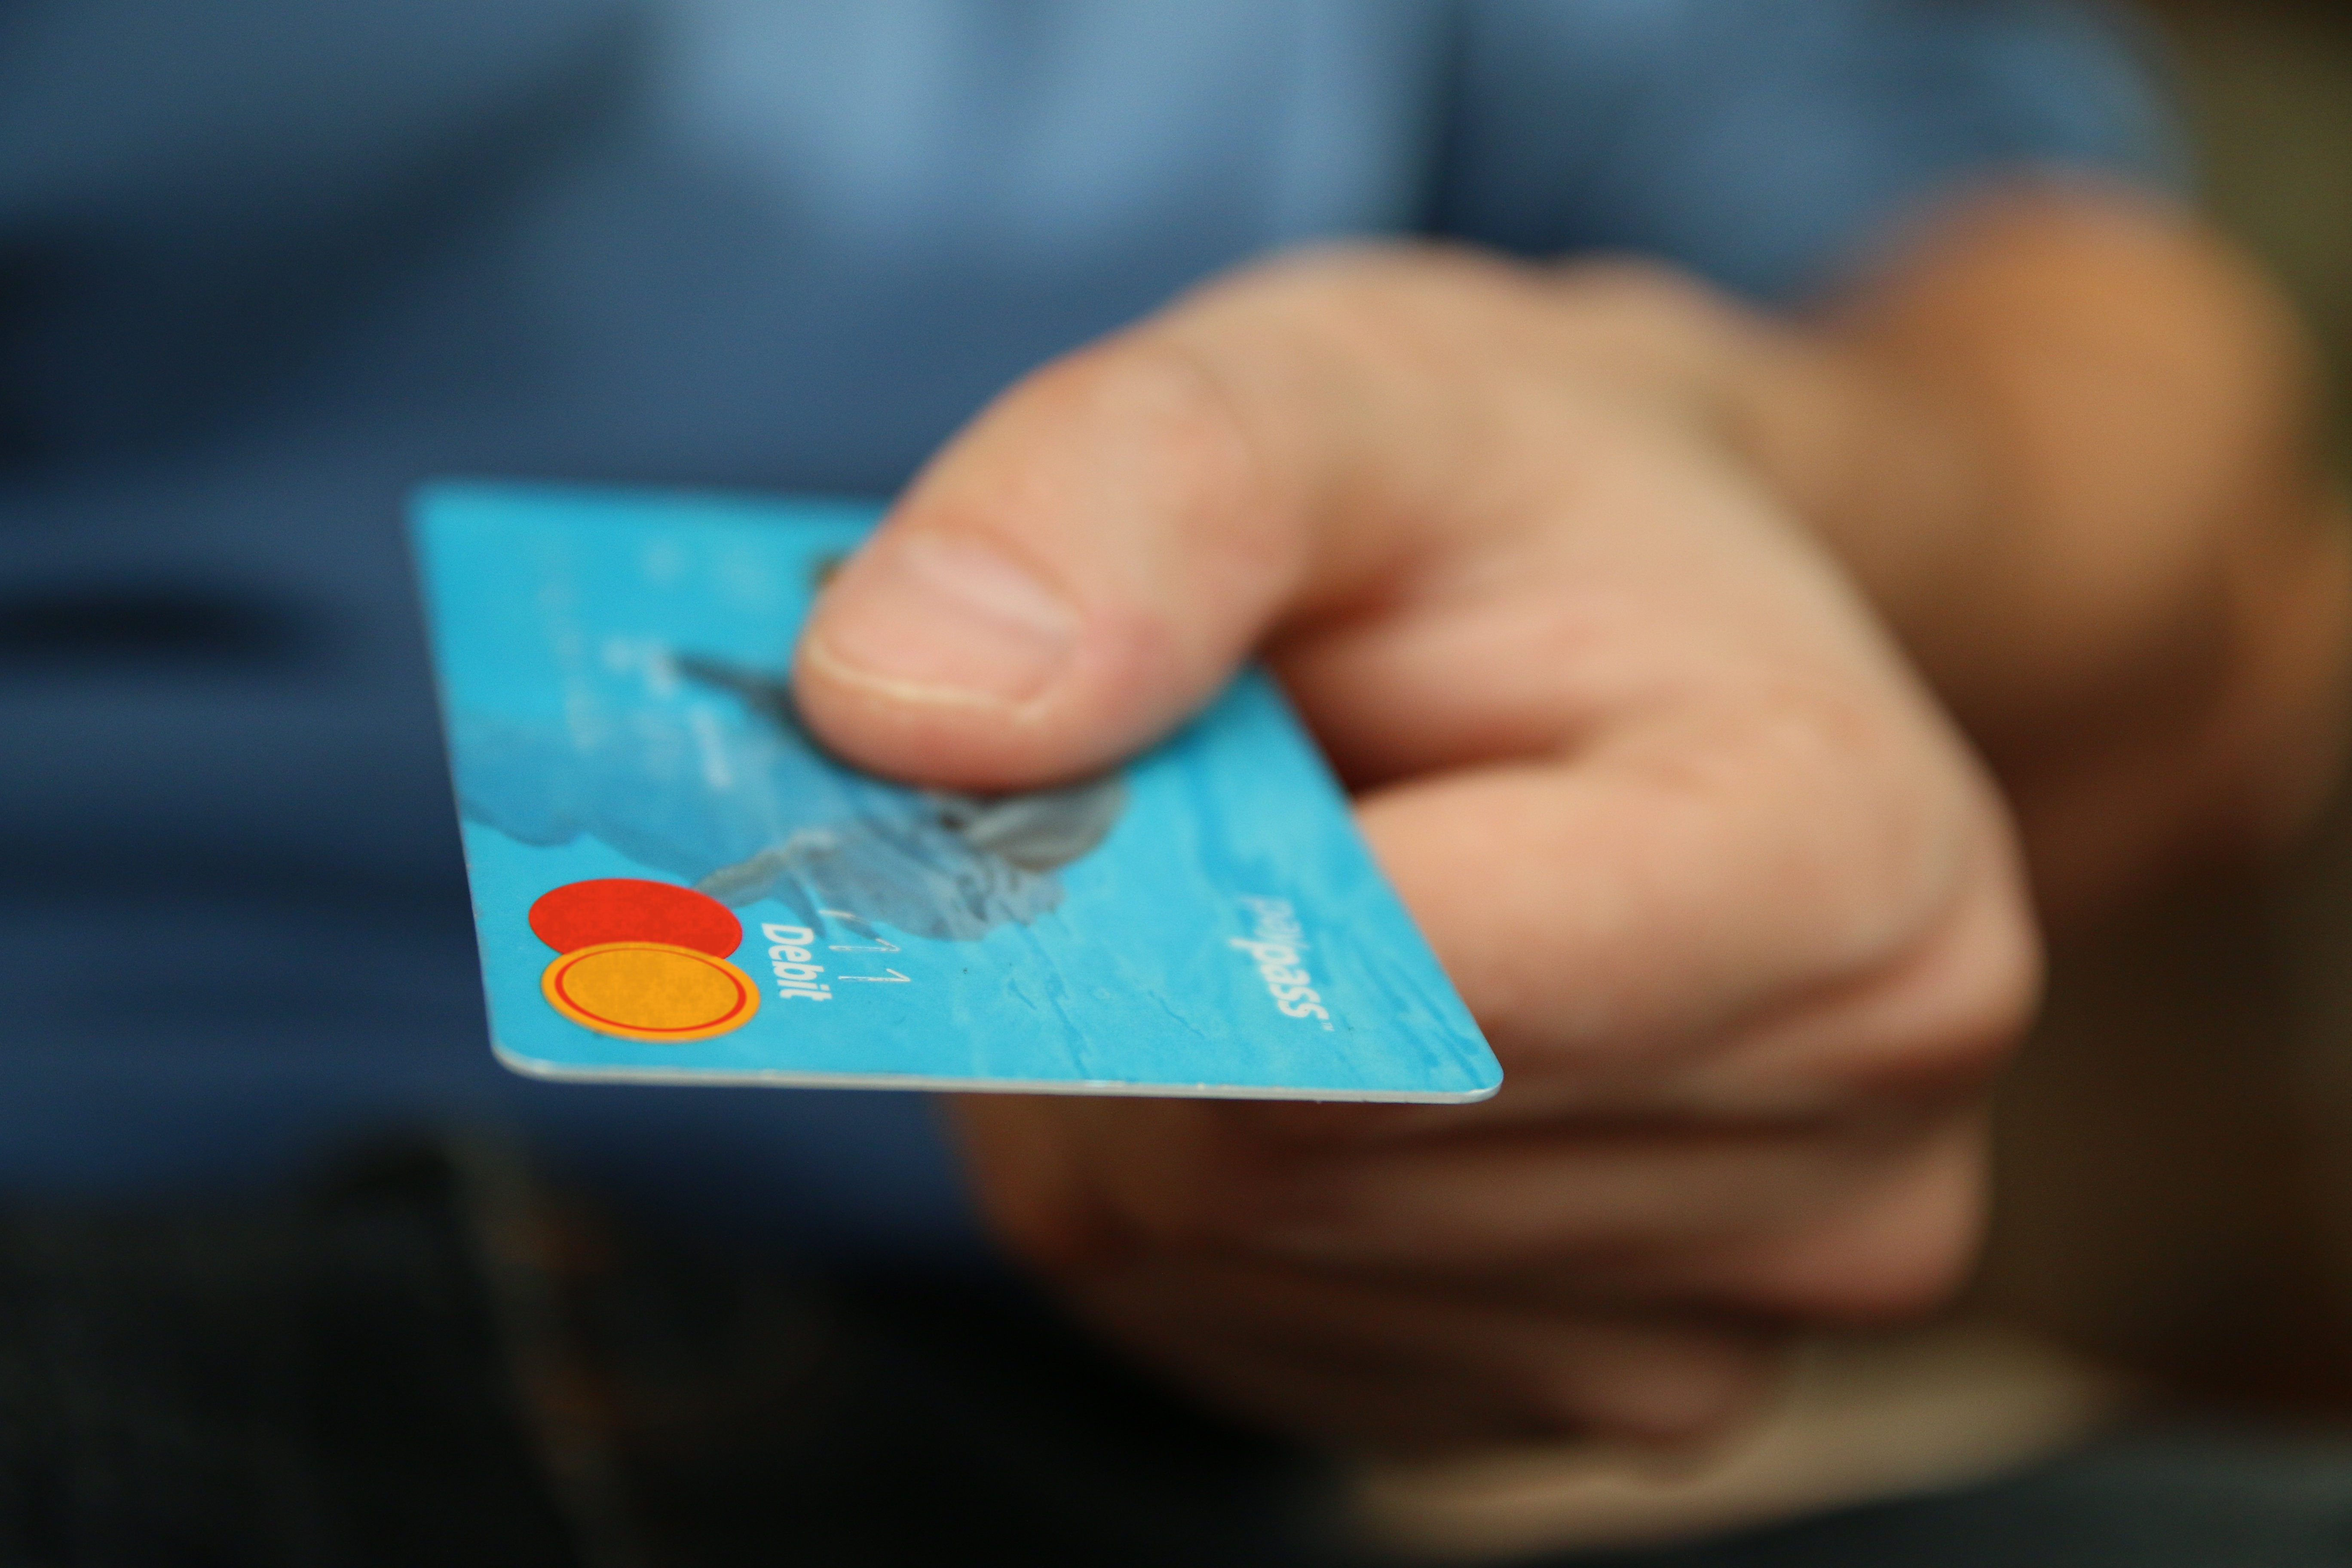 elder-financial-abuse-handing-over-credit-card-dkry